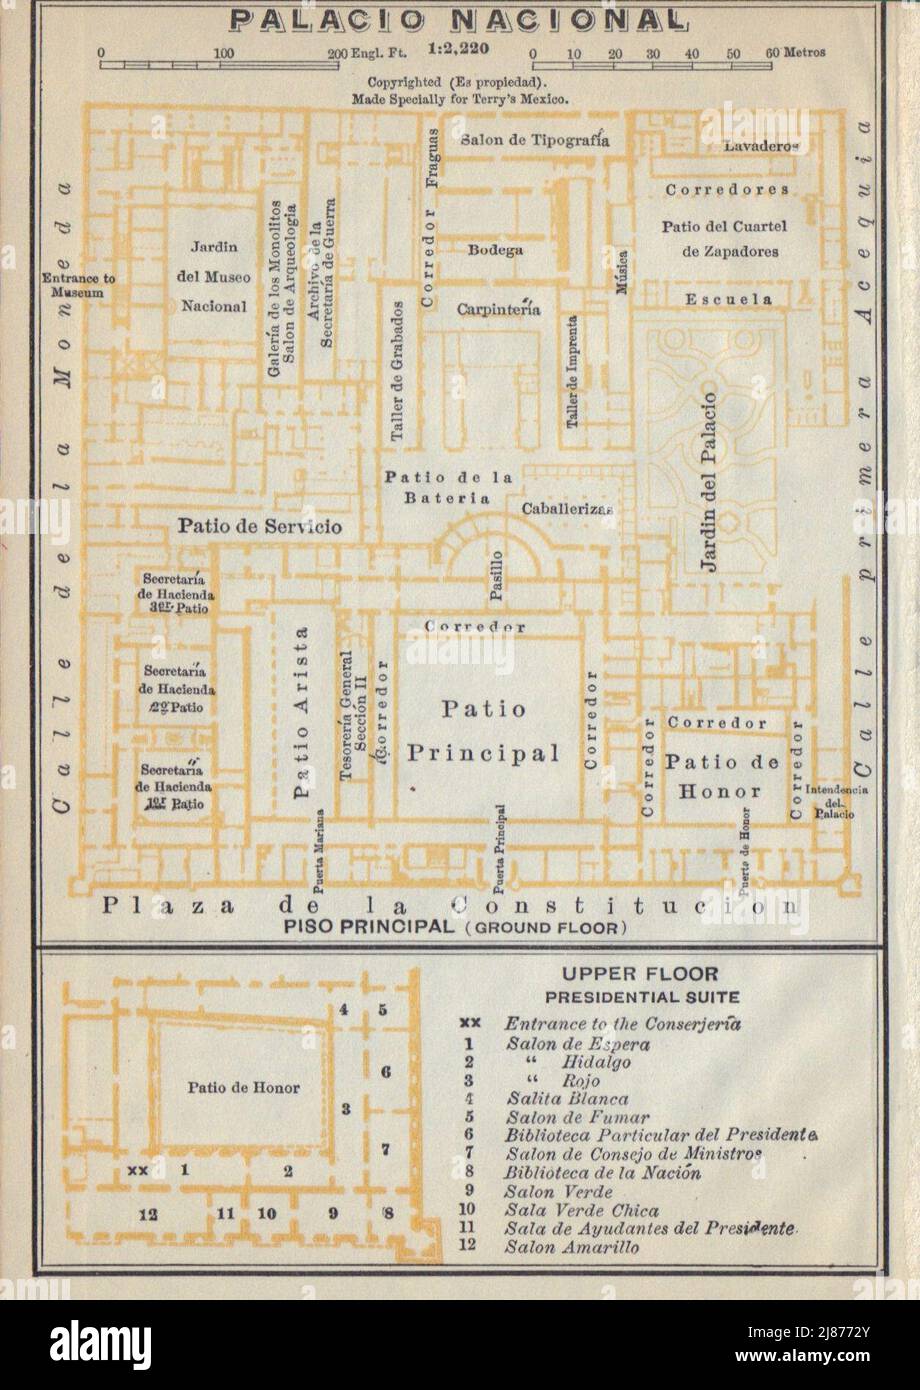 Palacio Nacional, Mexico City 1938 old vintage map plan chart Stock Photo